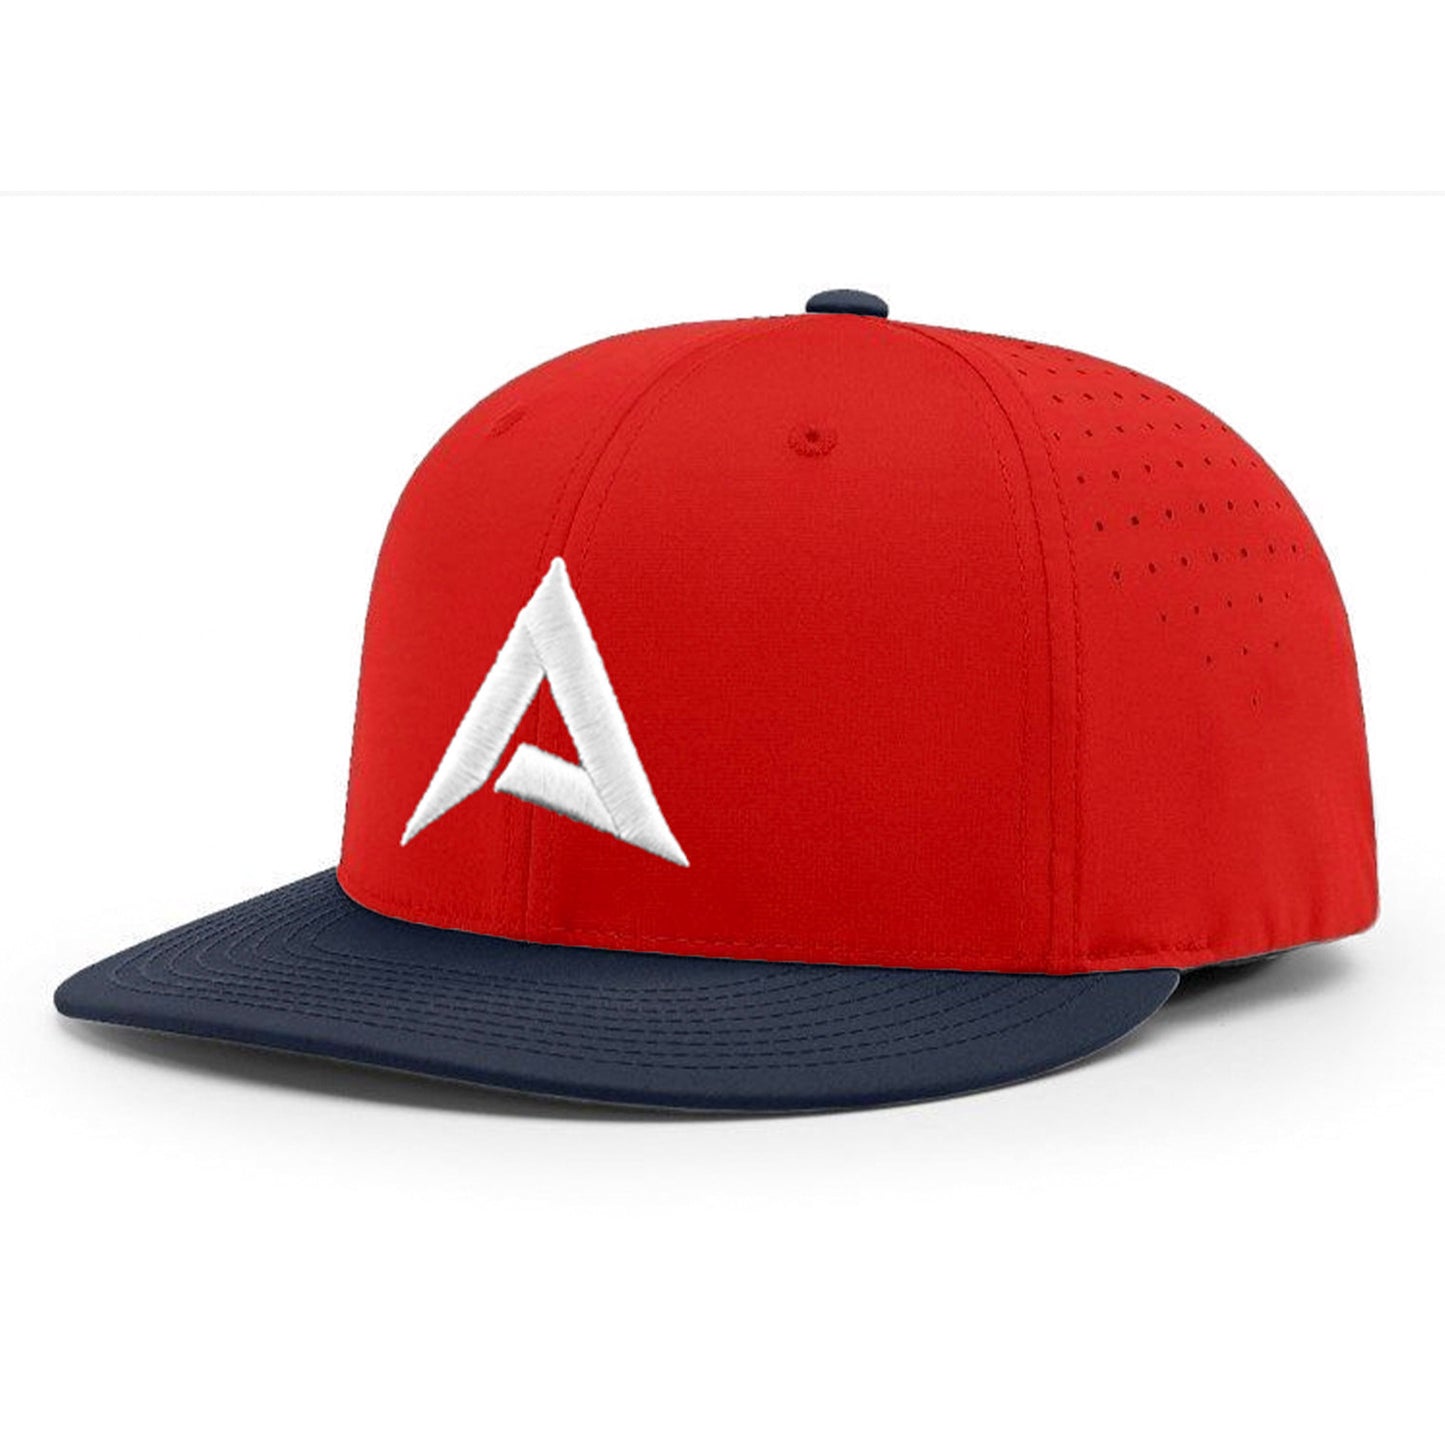 Anarchy CA i8503 Performance Hat - New Logo - Red/Navy/White